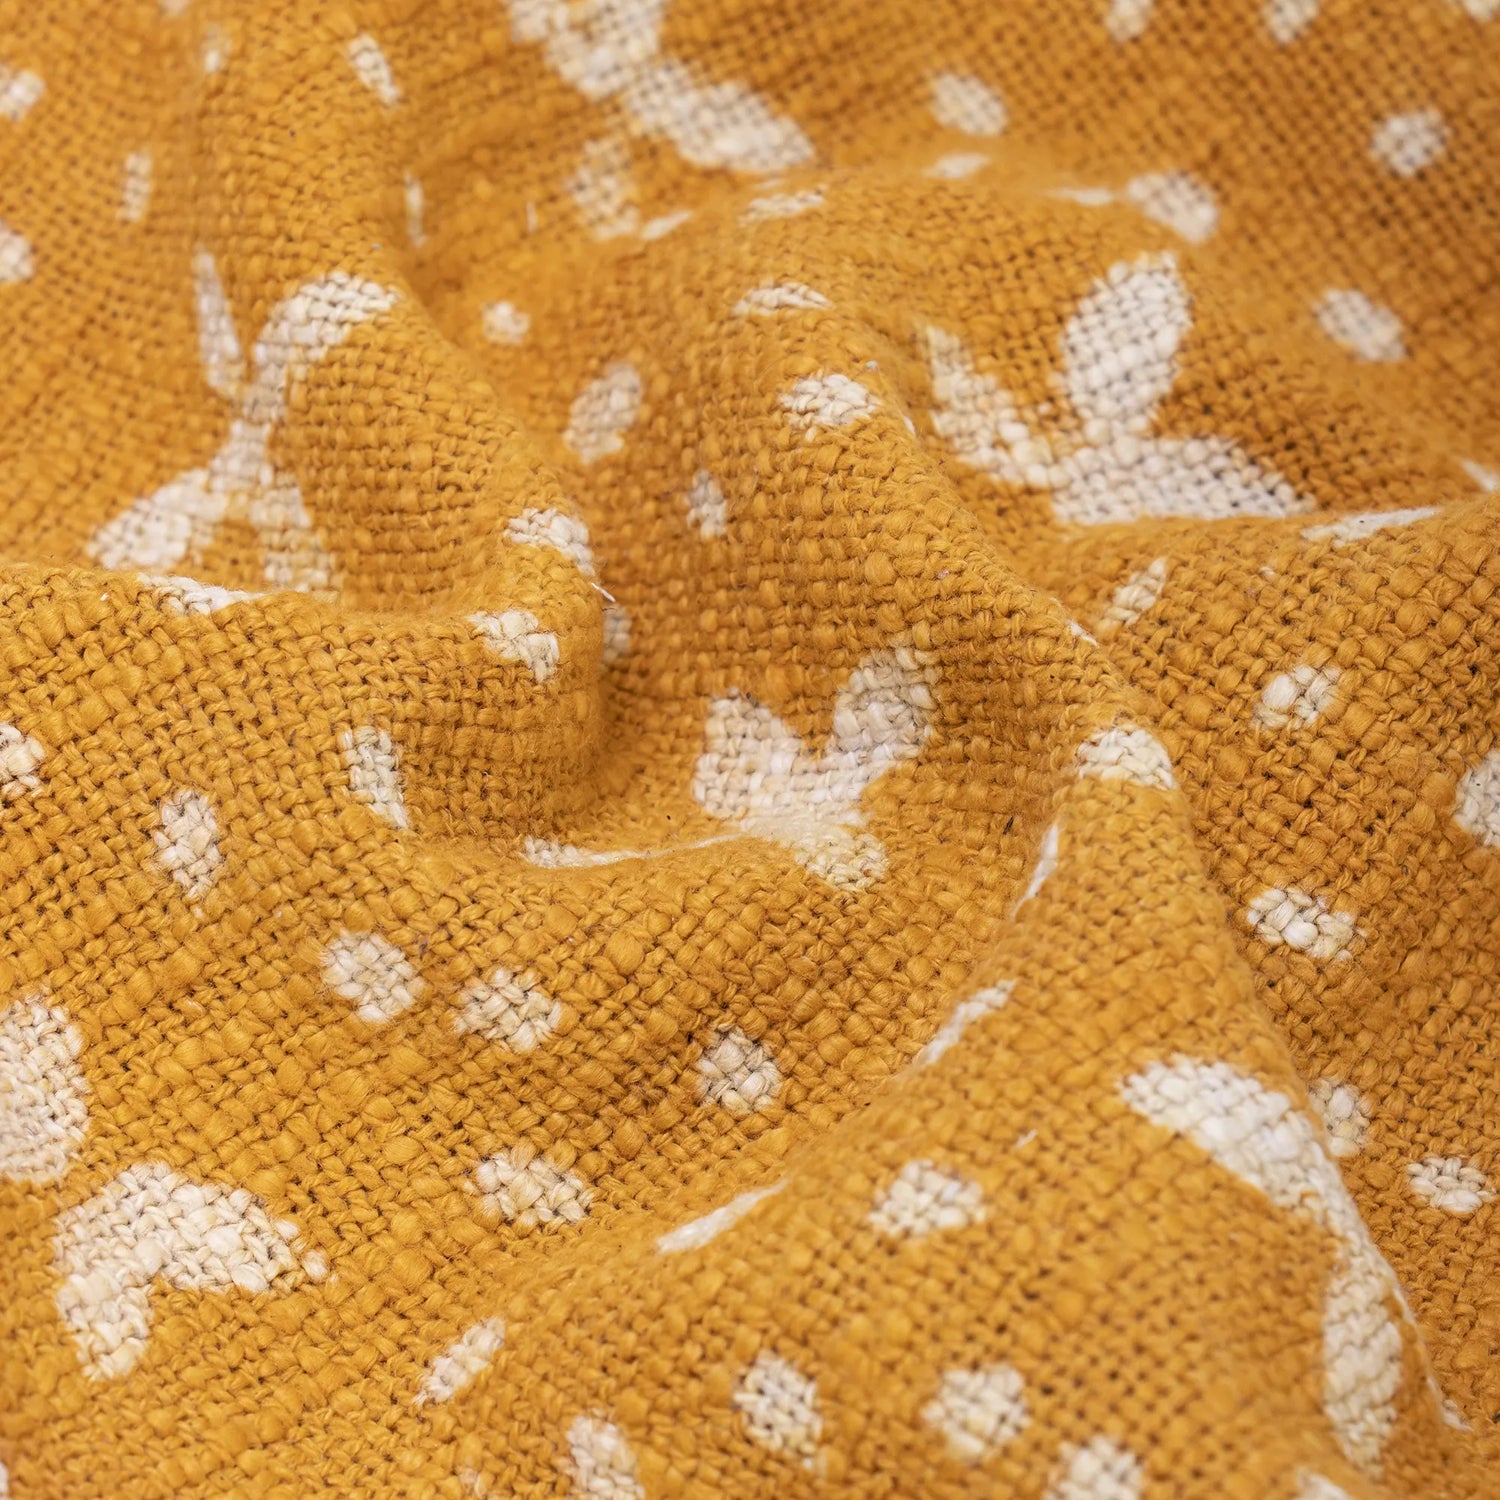 Star Pattern Mustard yellow Cotton Sofa Throw For Home Decor